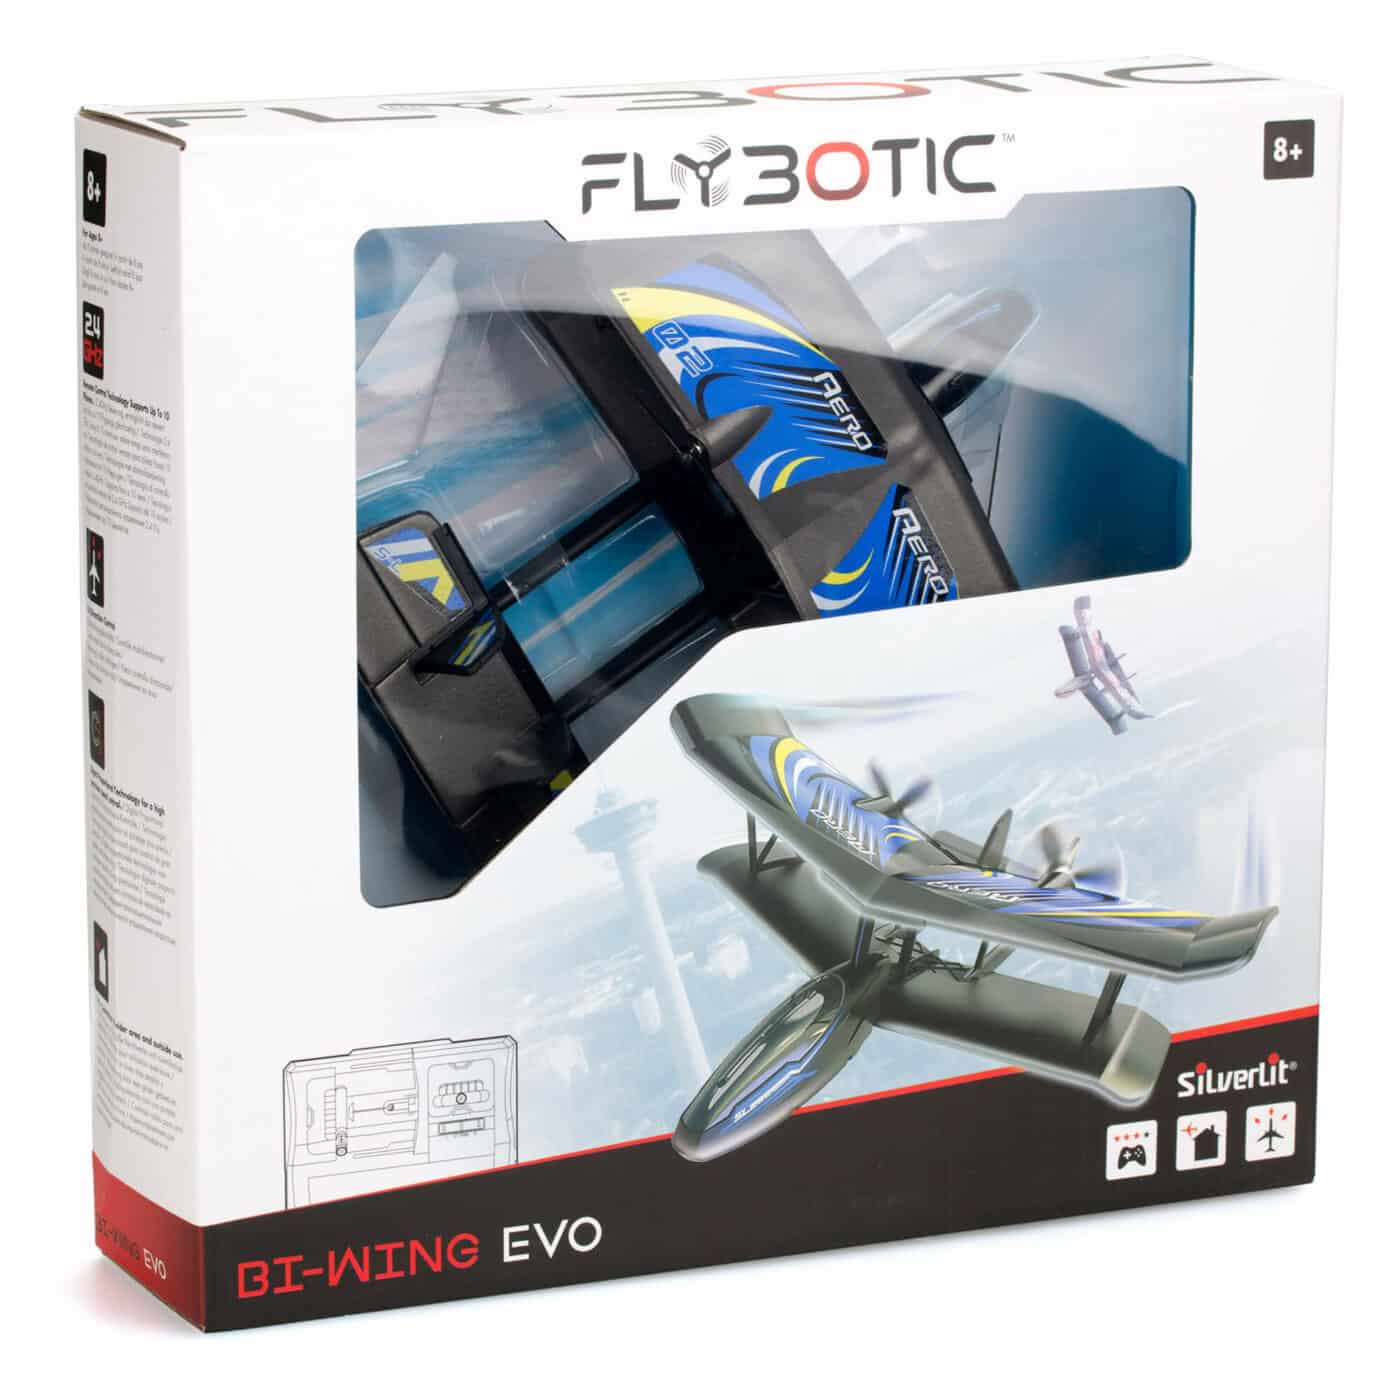 Silverlit - Flybotic Bi-Wing Evo - RC Plane3